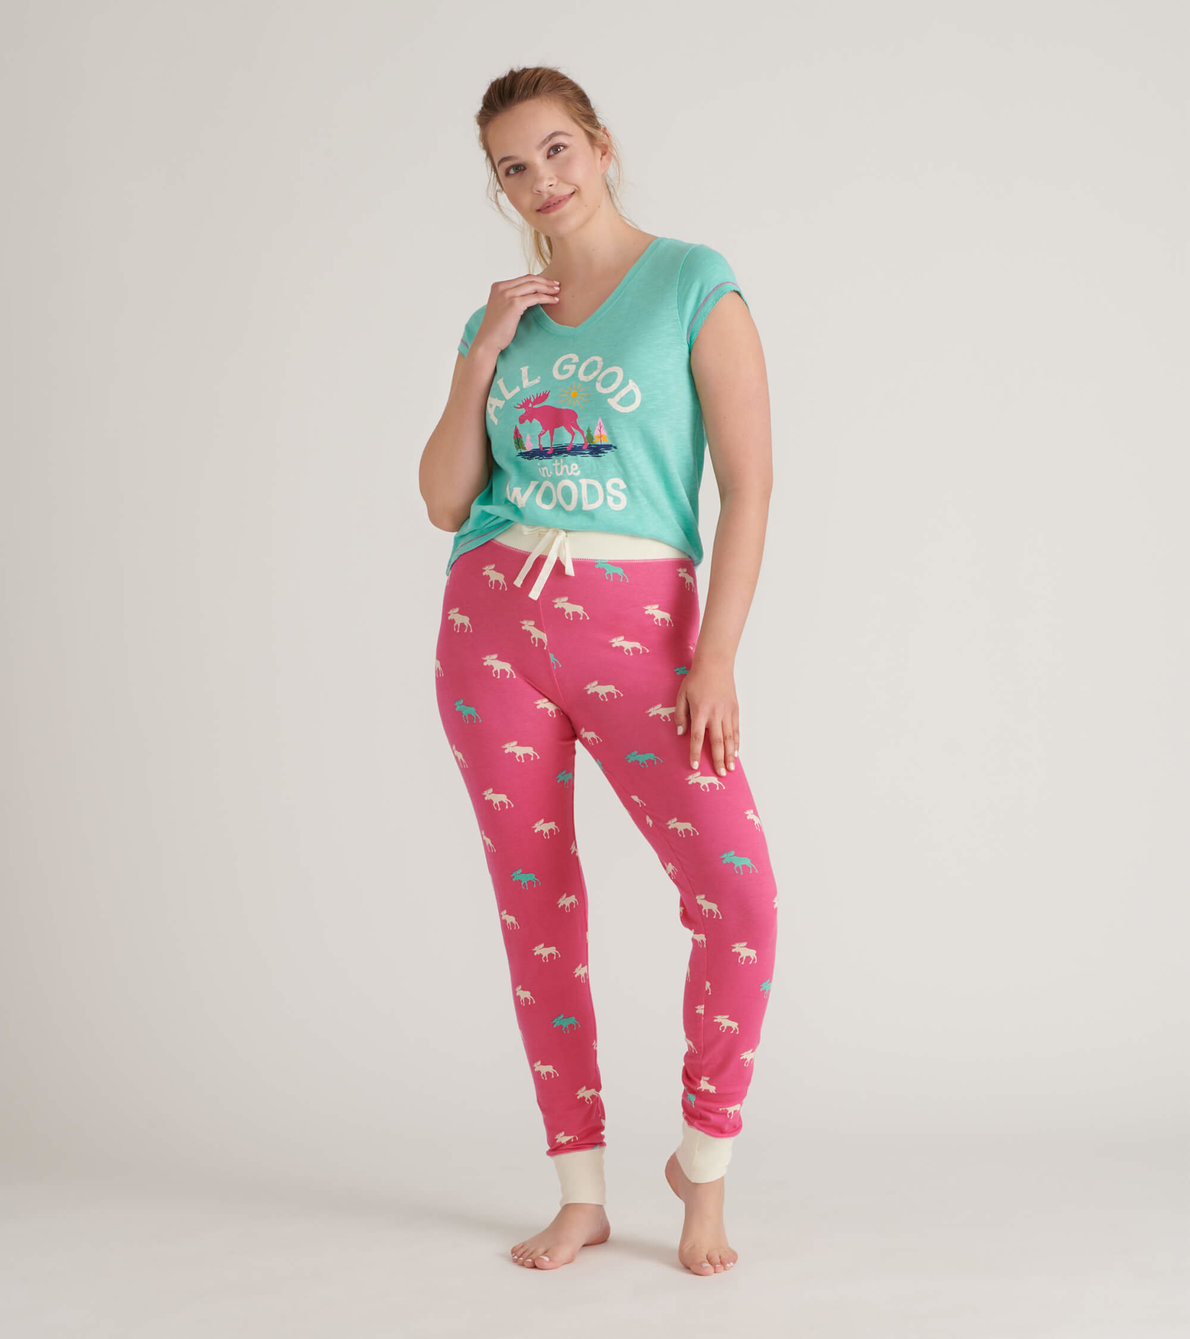 View larger image of Glamping Women's Tee and Leggings Pajama Separates